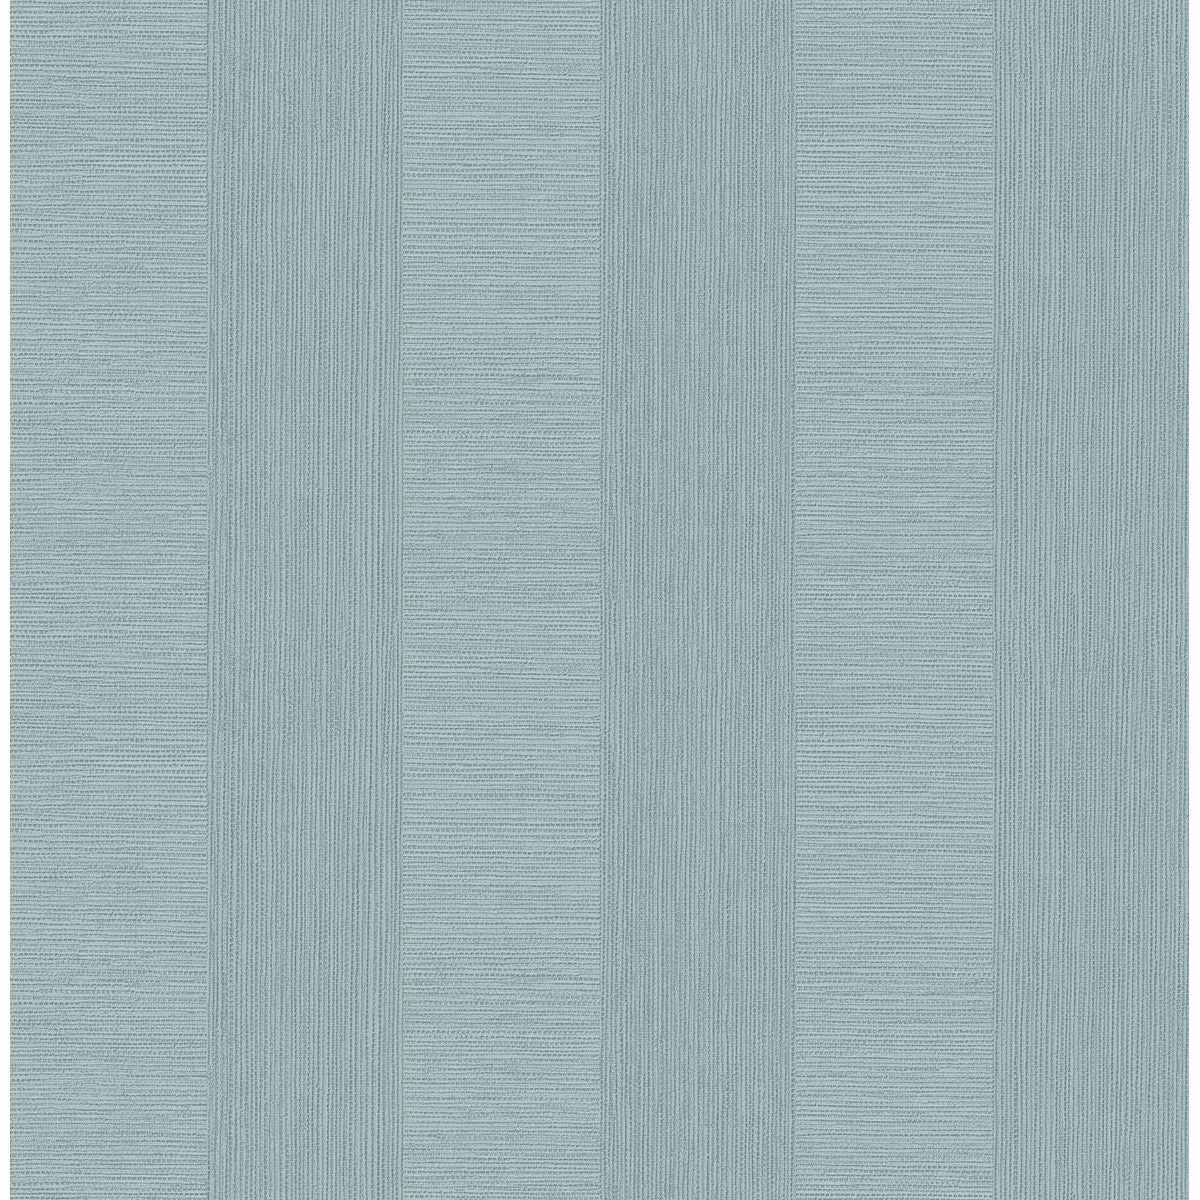 Picture of Intrepid Aqua Faux Grasscloth Stripe Wallpaper